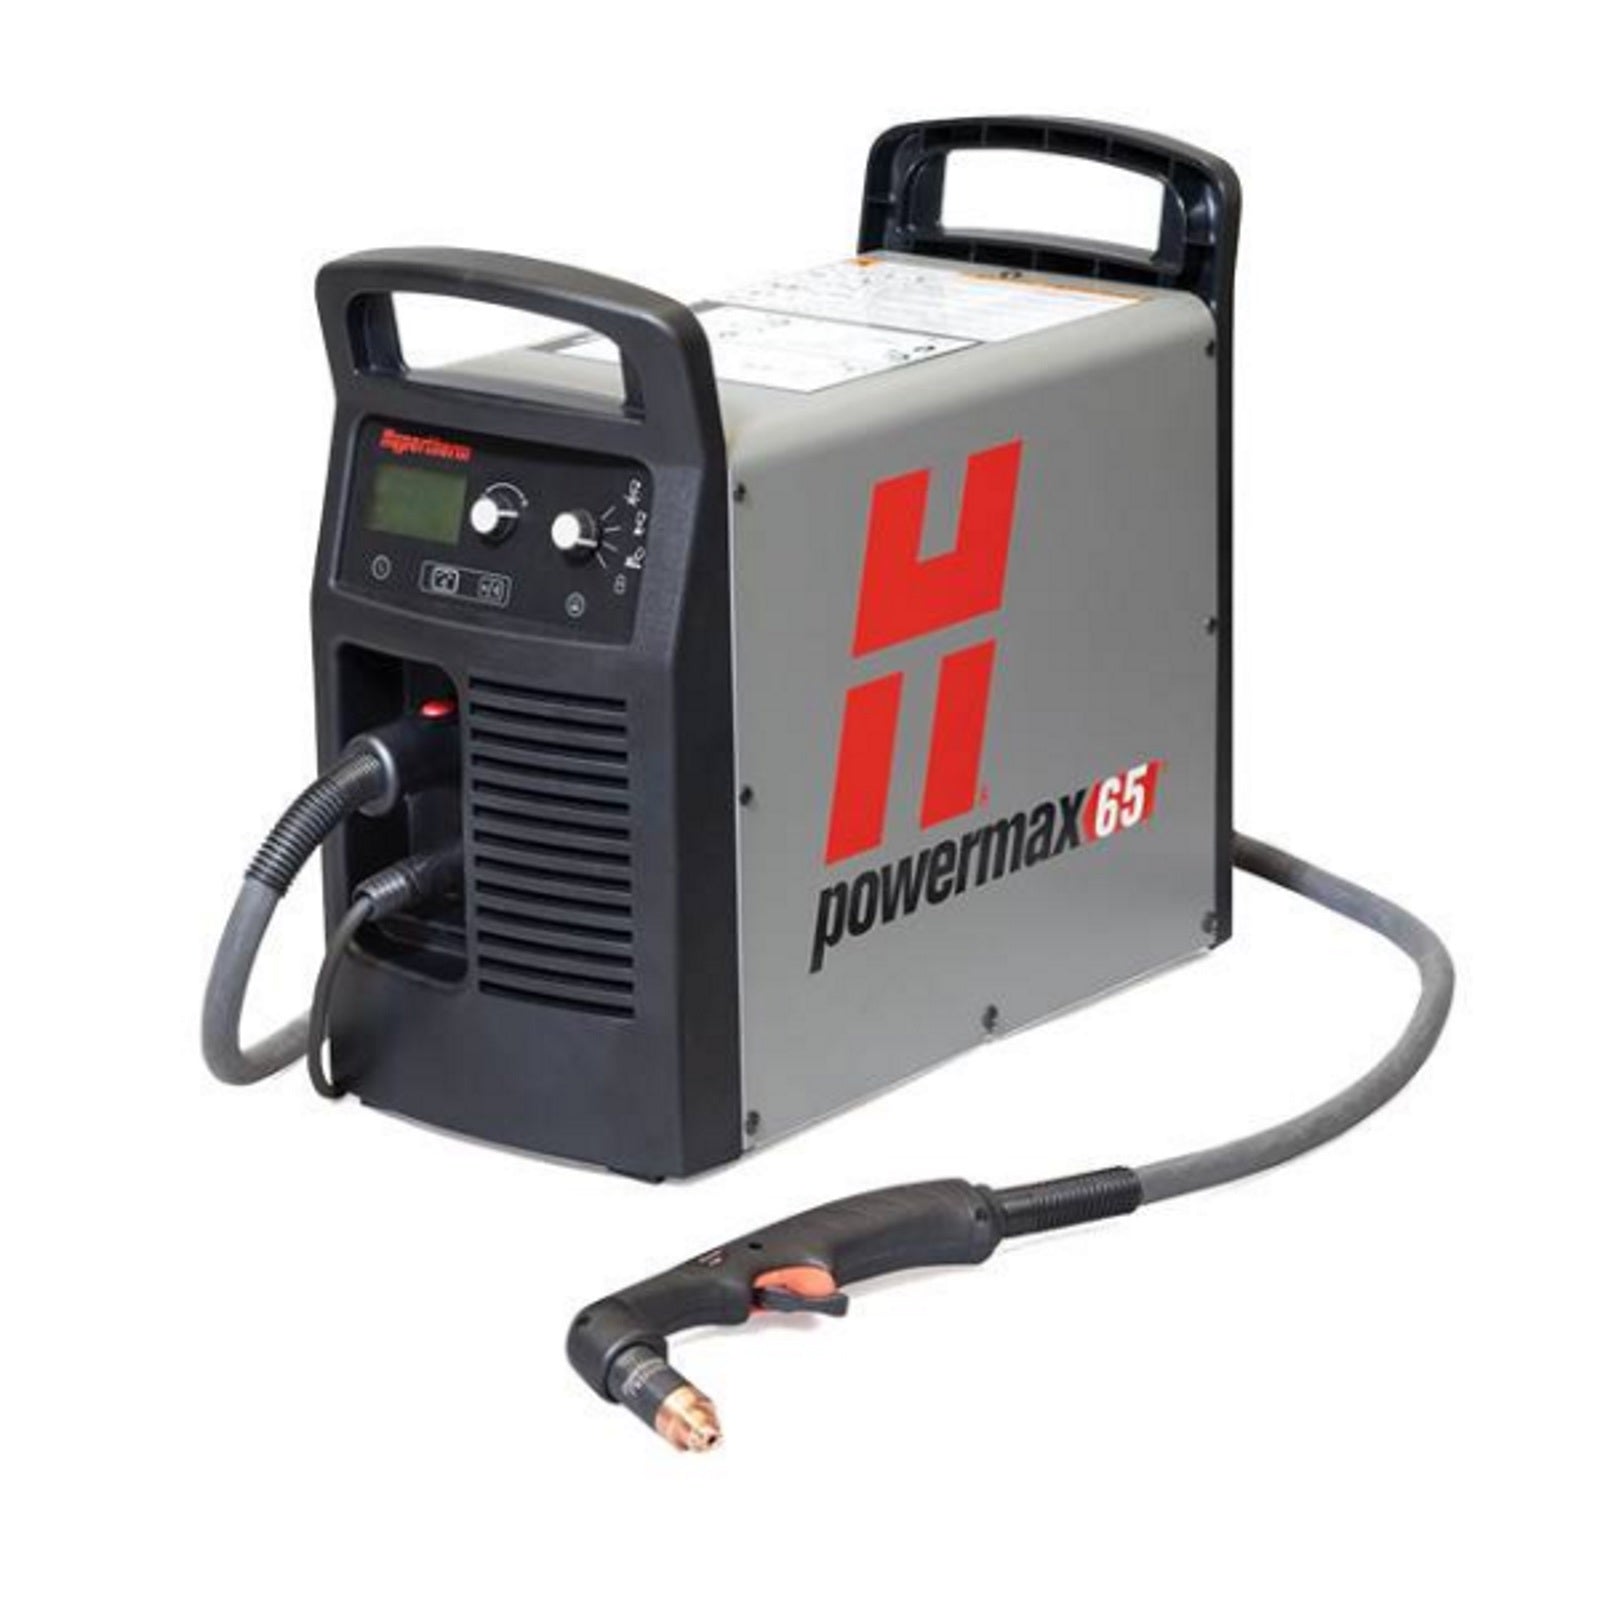 Hypertherm Powermax 65 Plasma Cutter w/25' Hand Torch (083270)